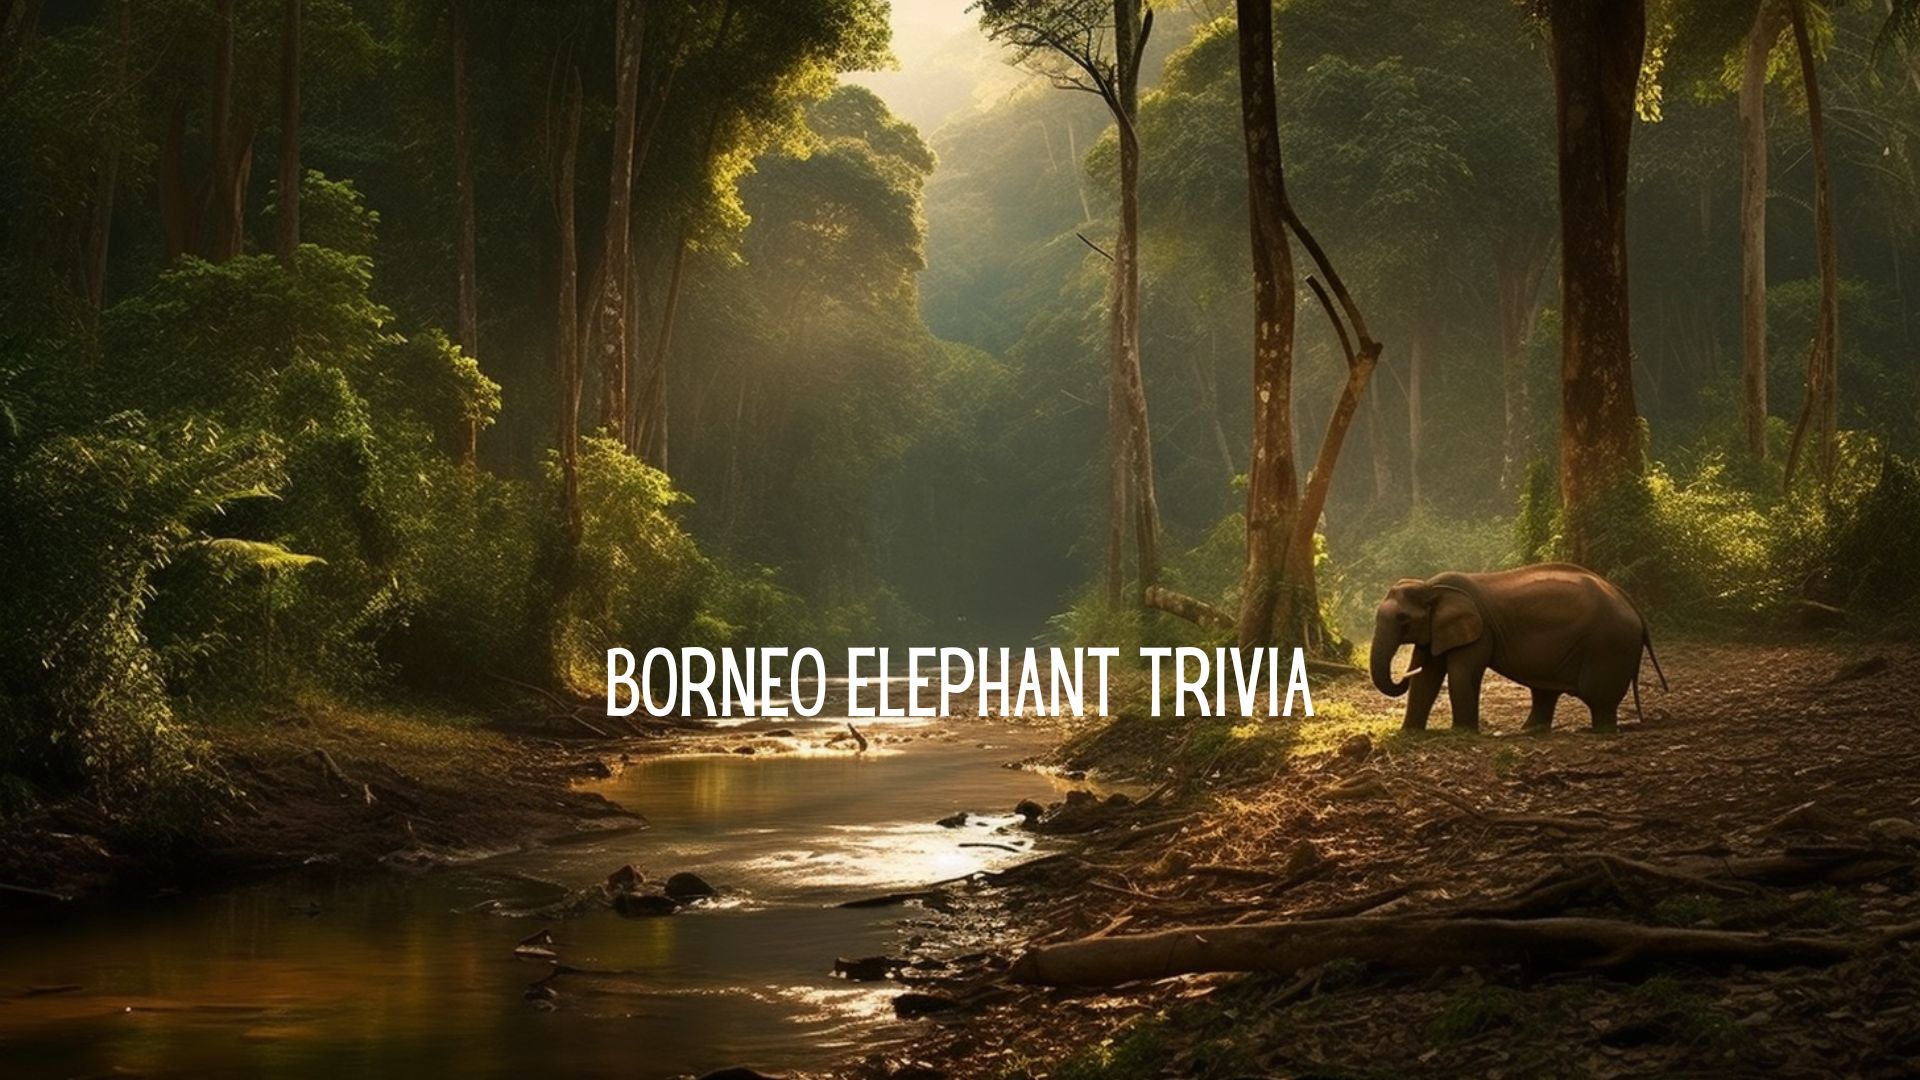 Borneo elephant trivia